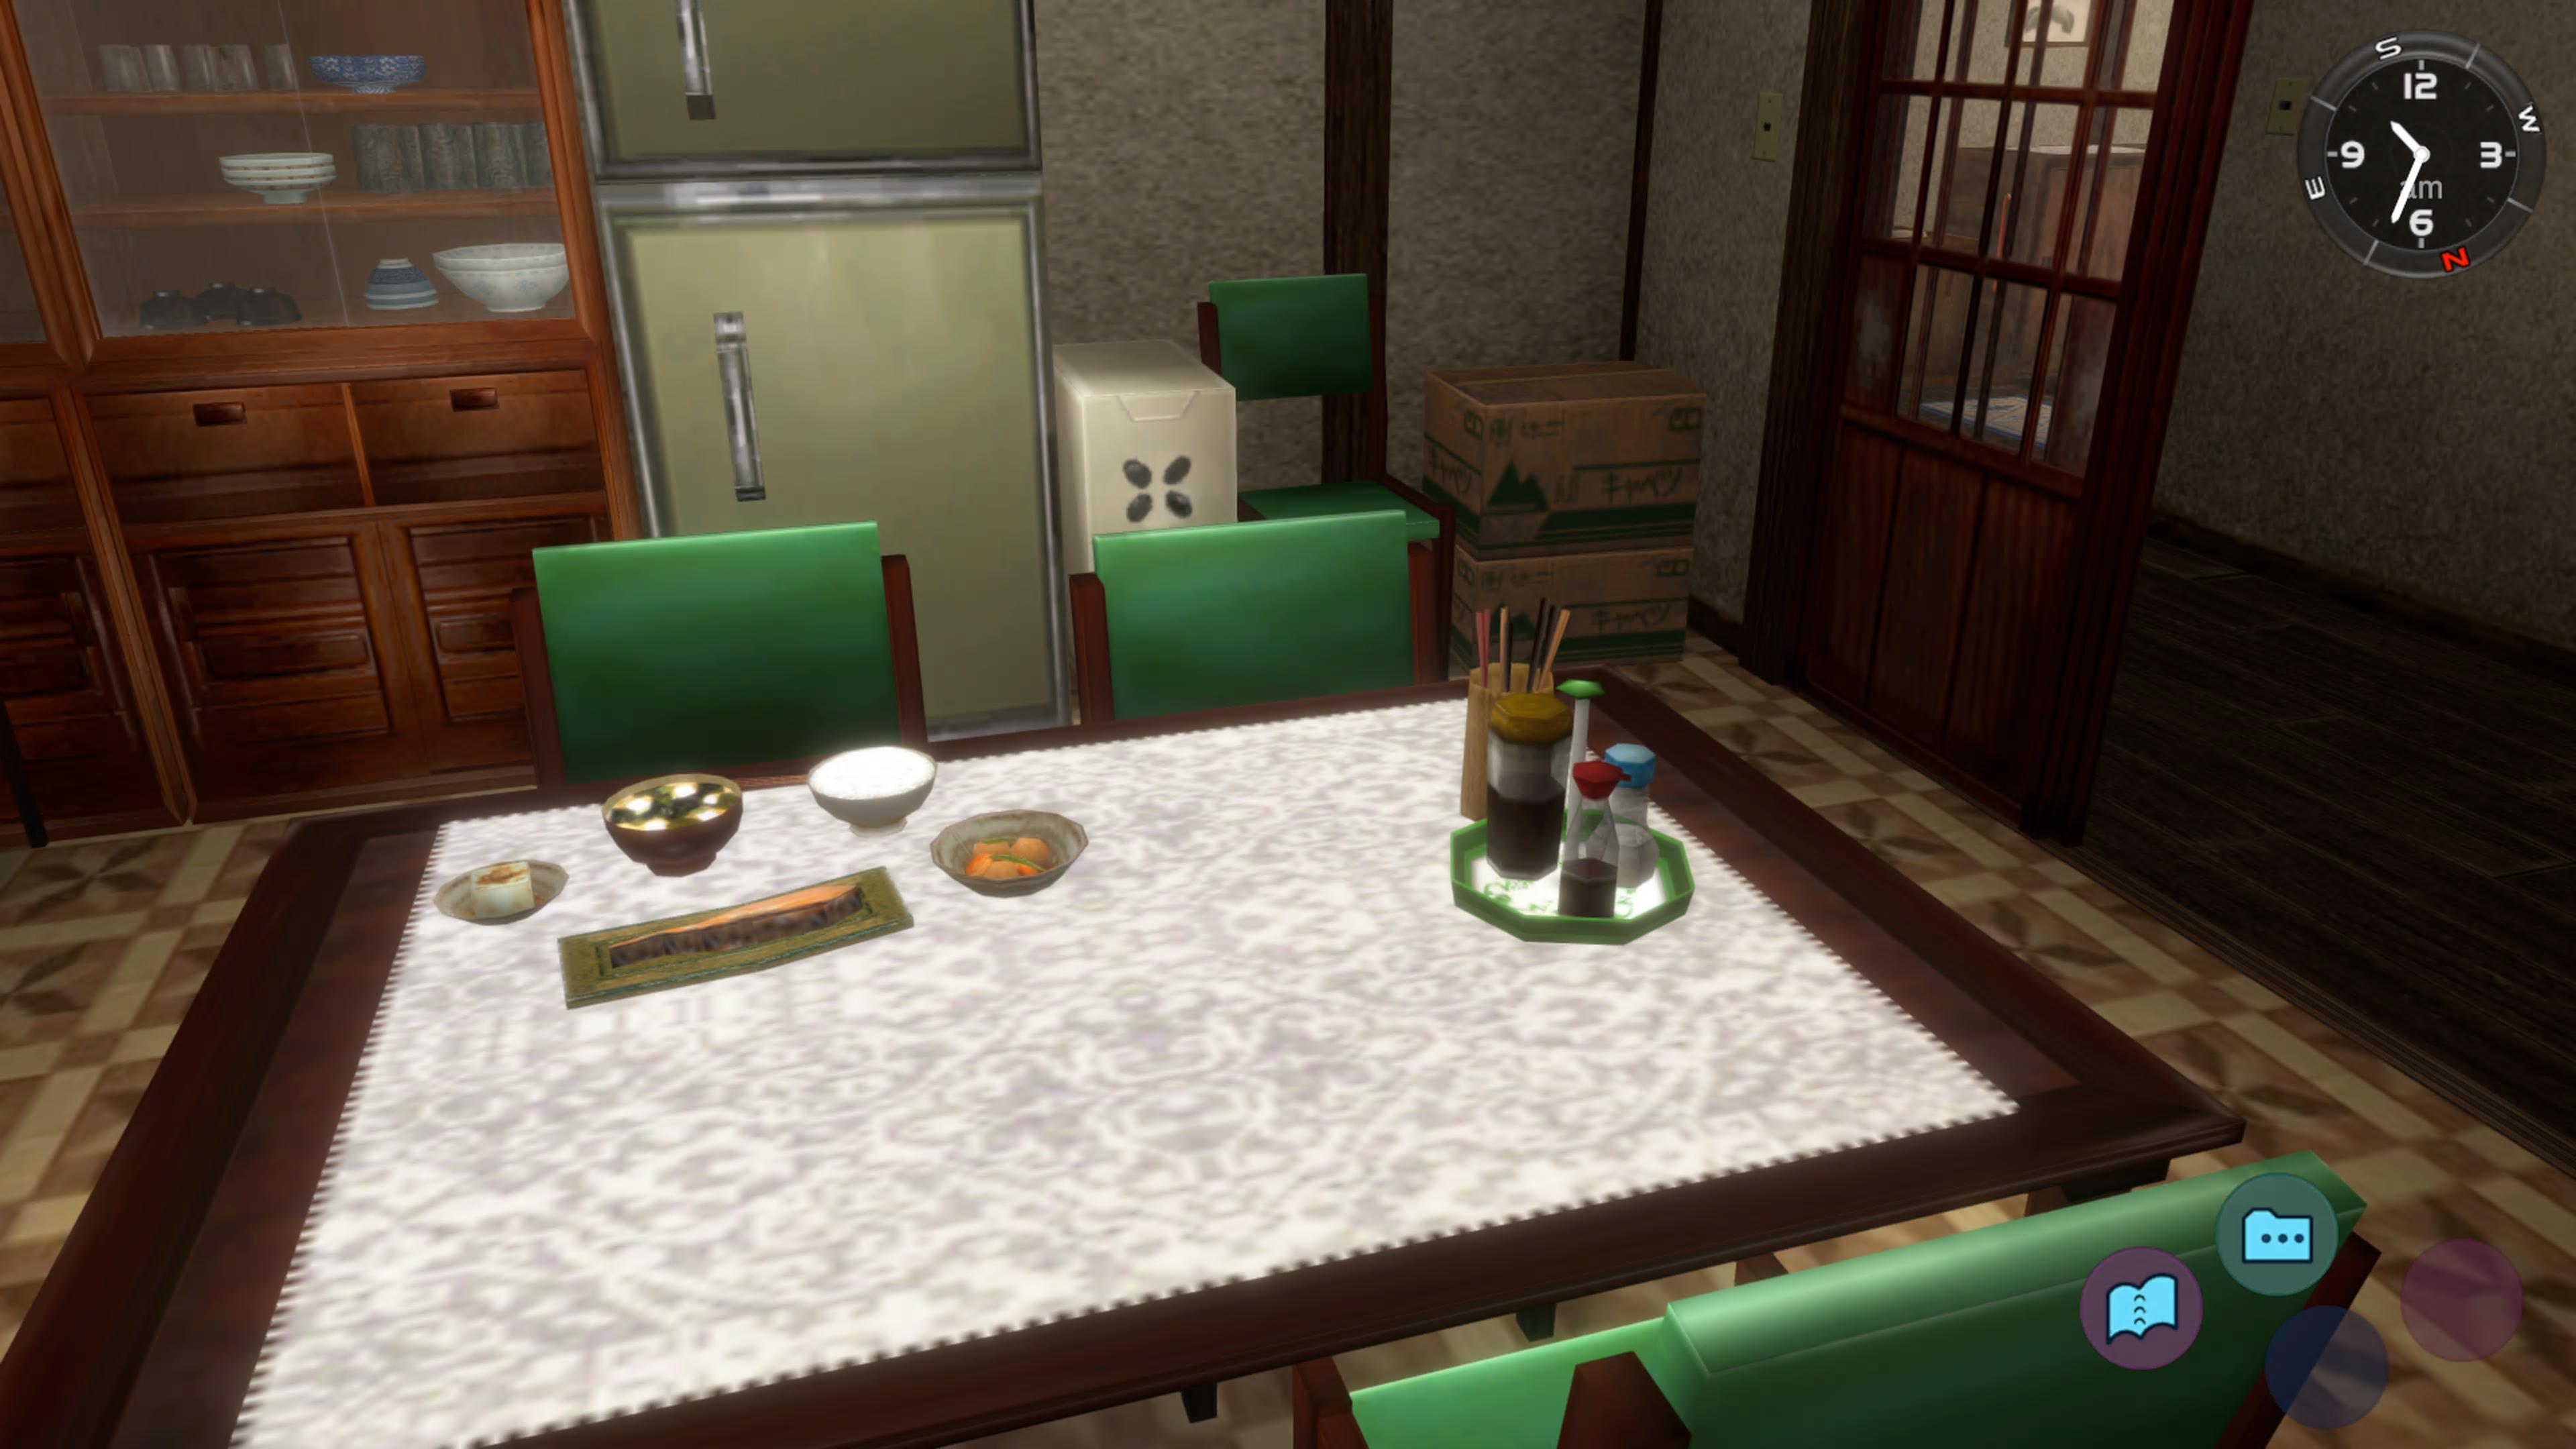 The Hazuki kitchen table